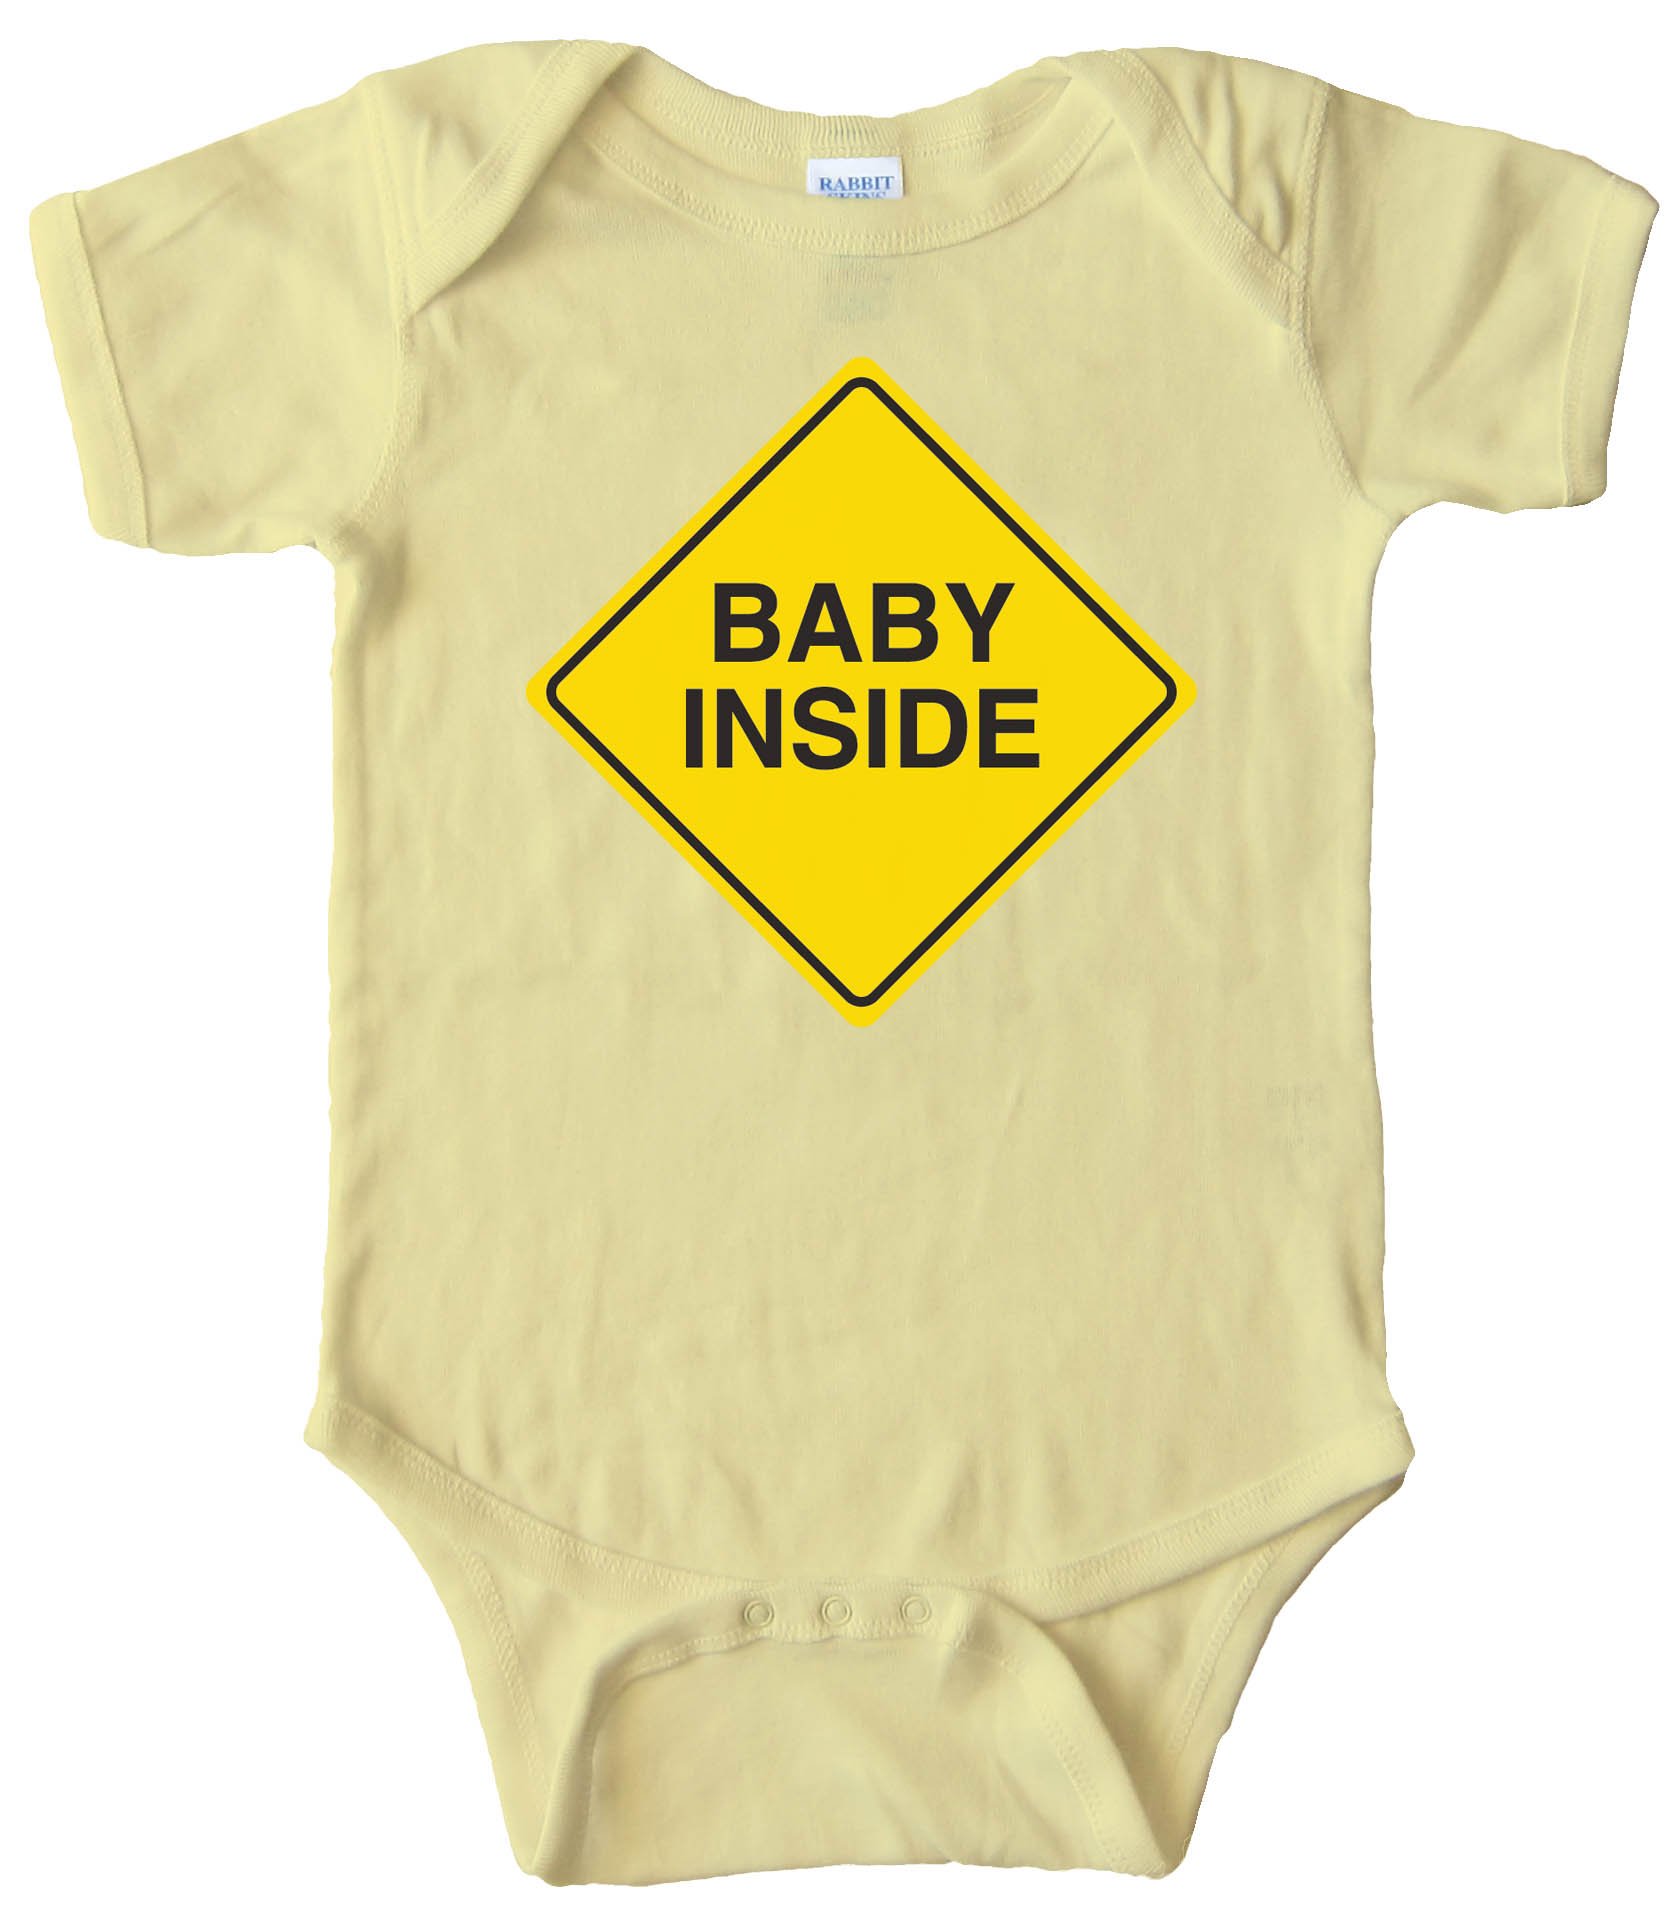 Baby On Board Baby Inside - Baby Bodysuit